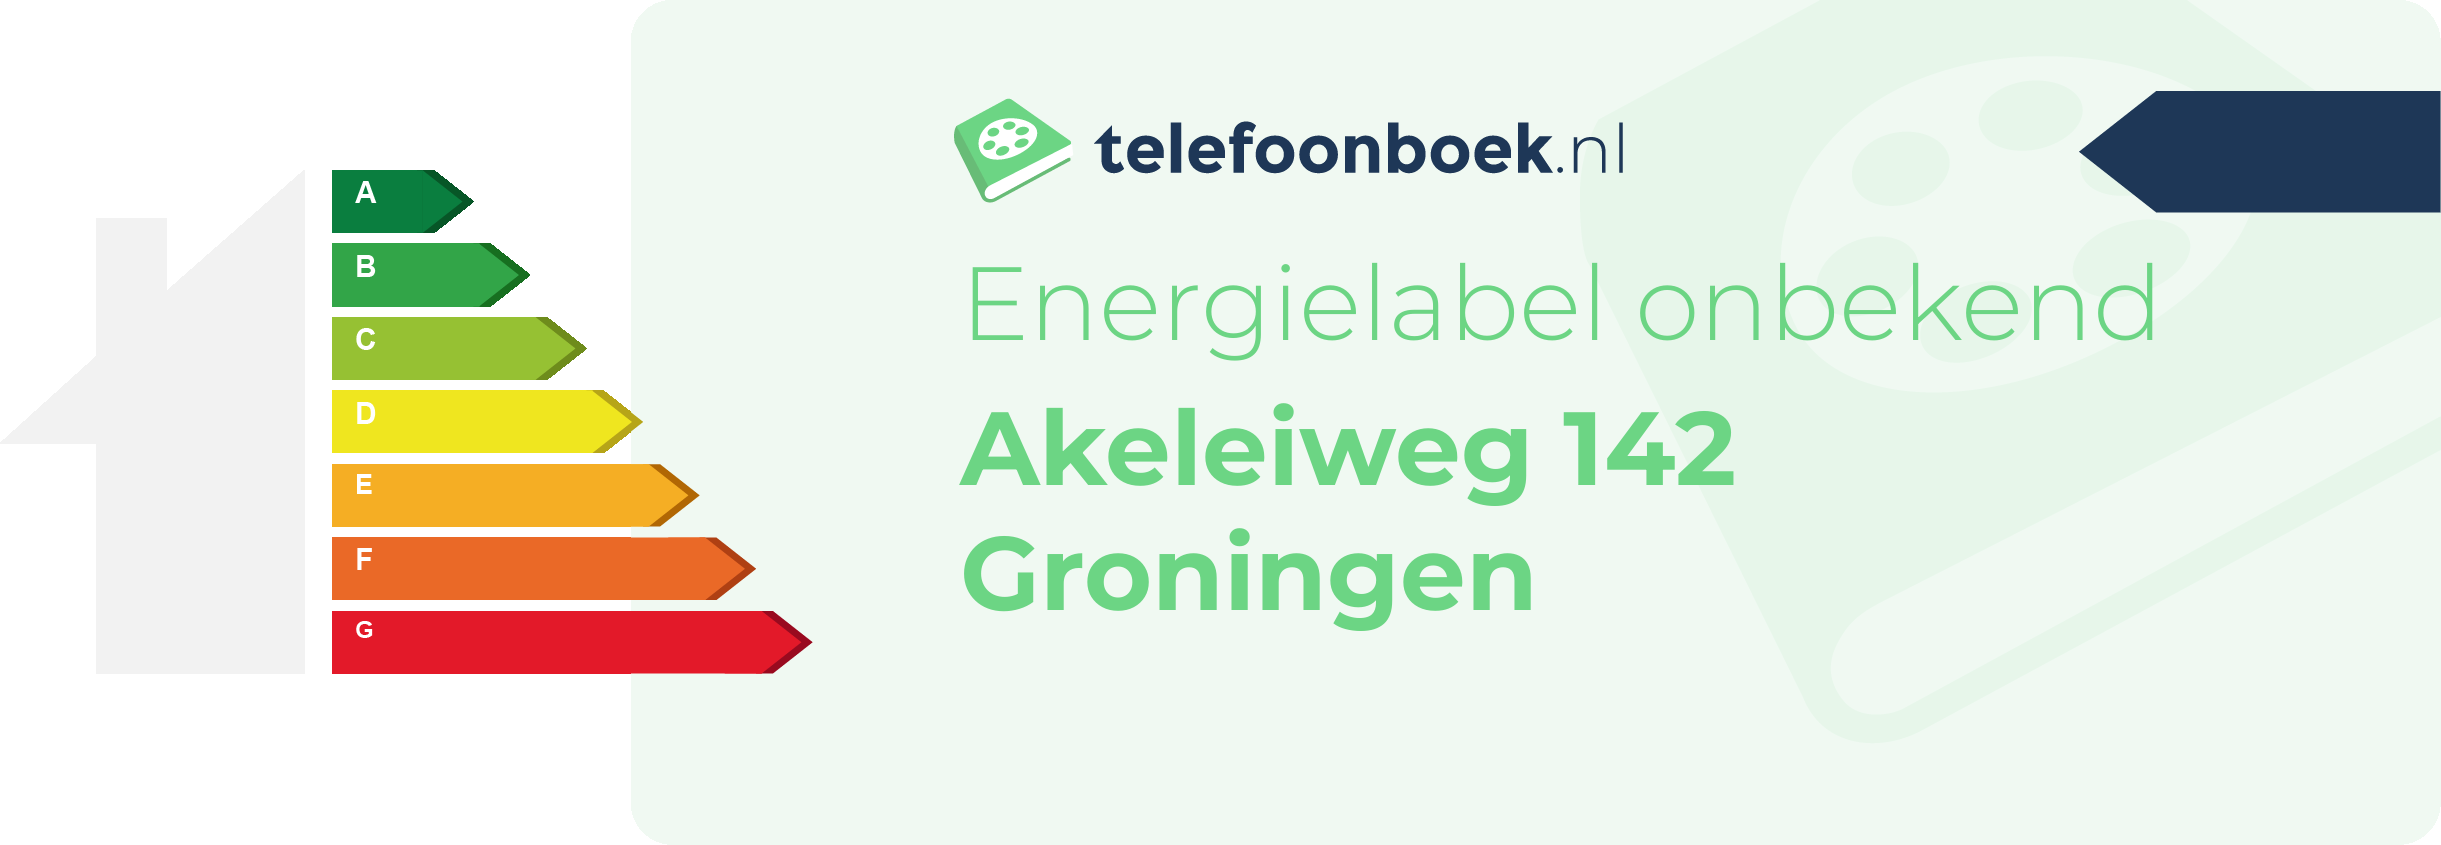 Energielabel Akeleiweg 142 Groningen